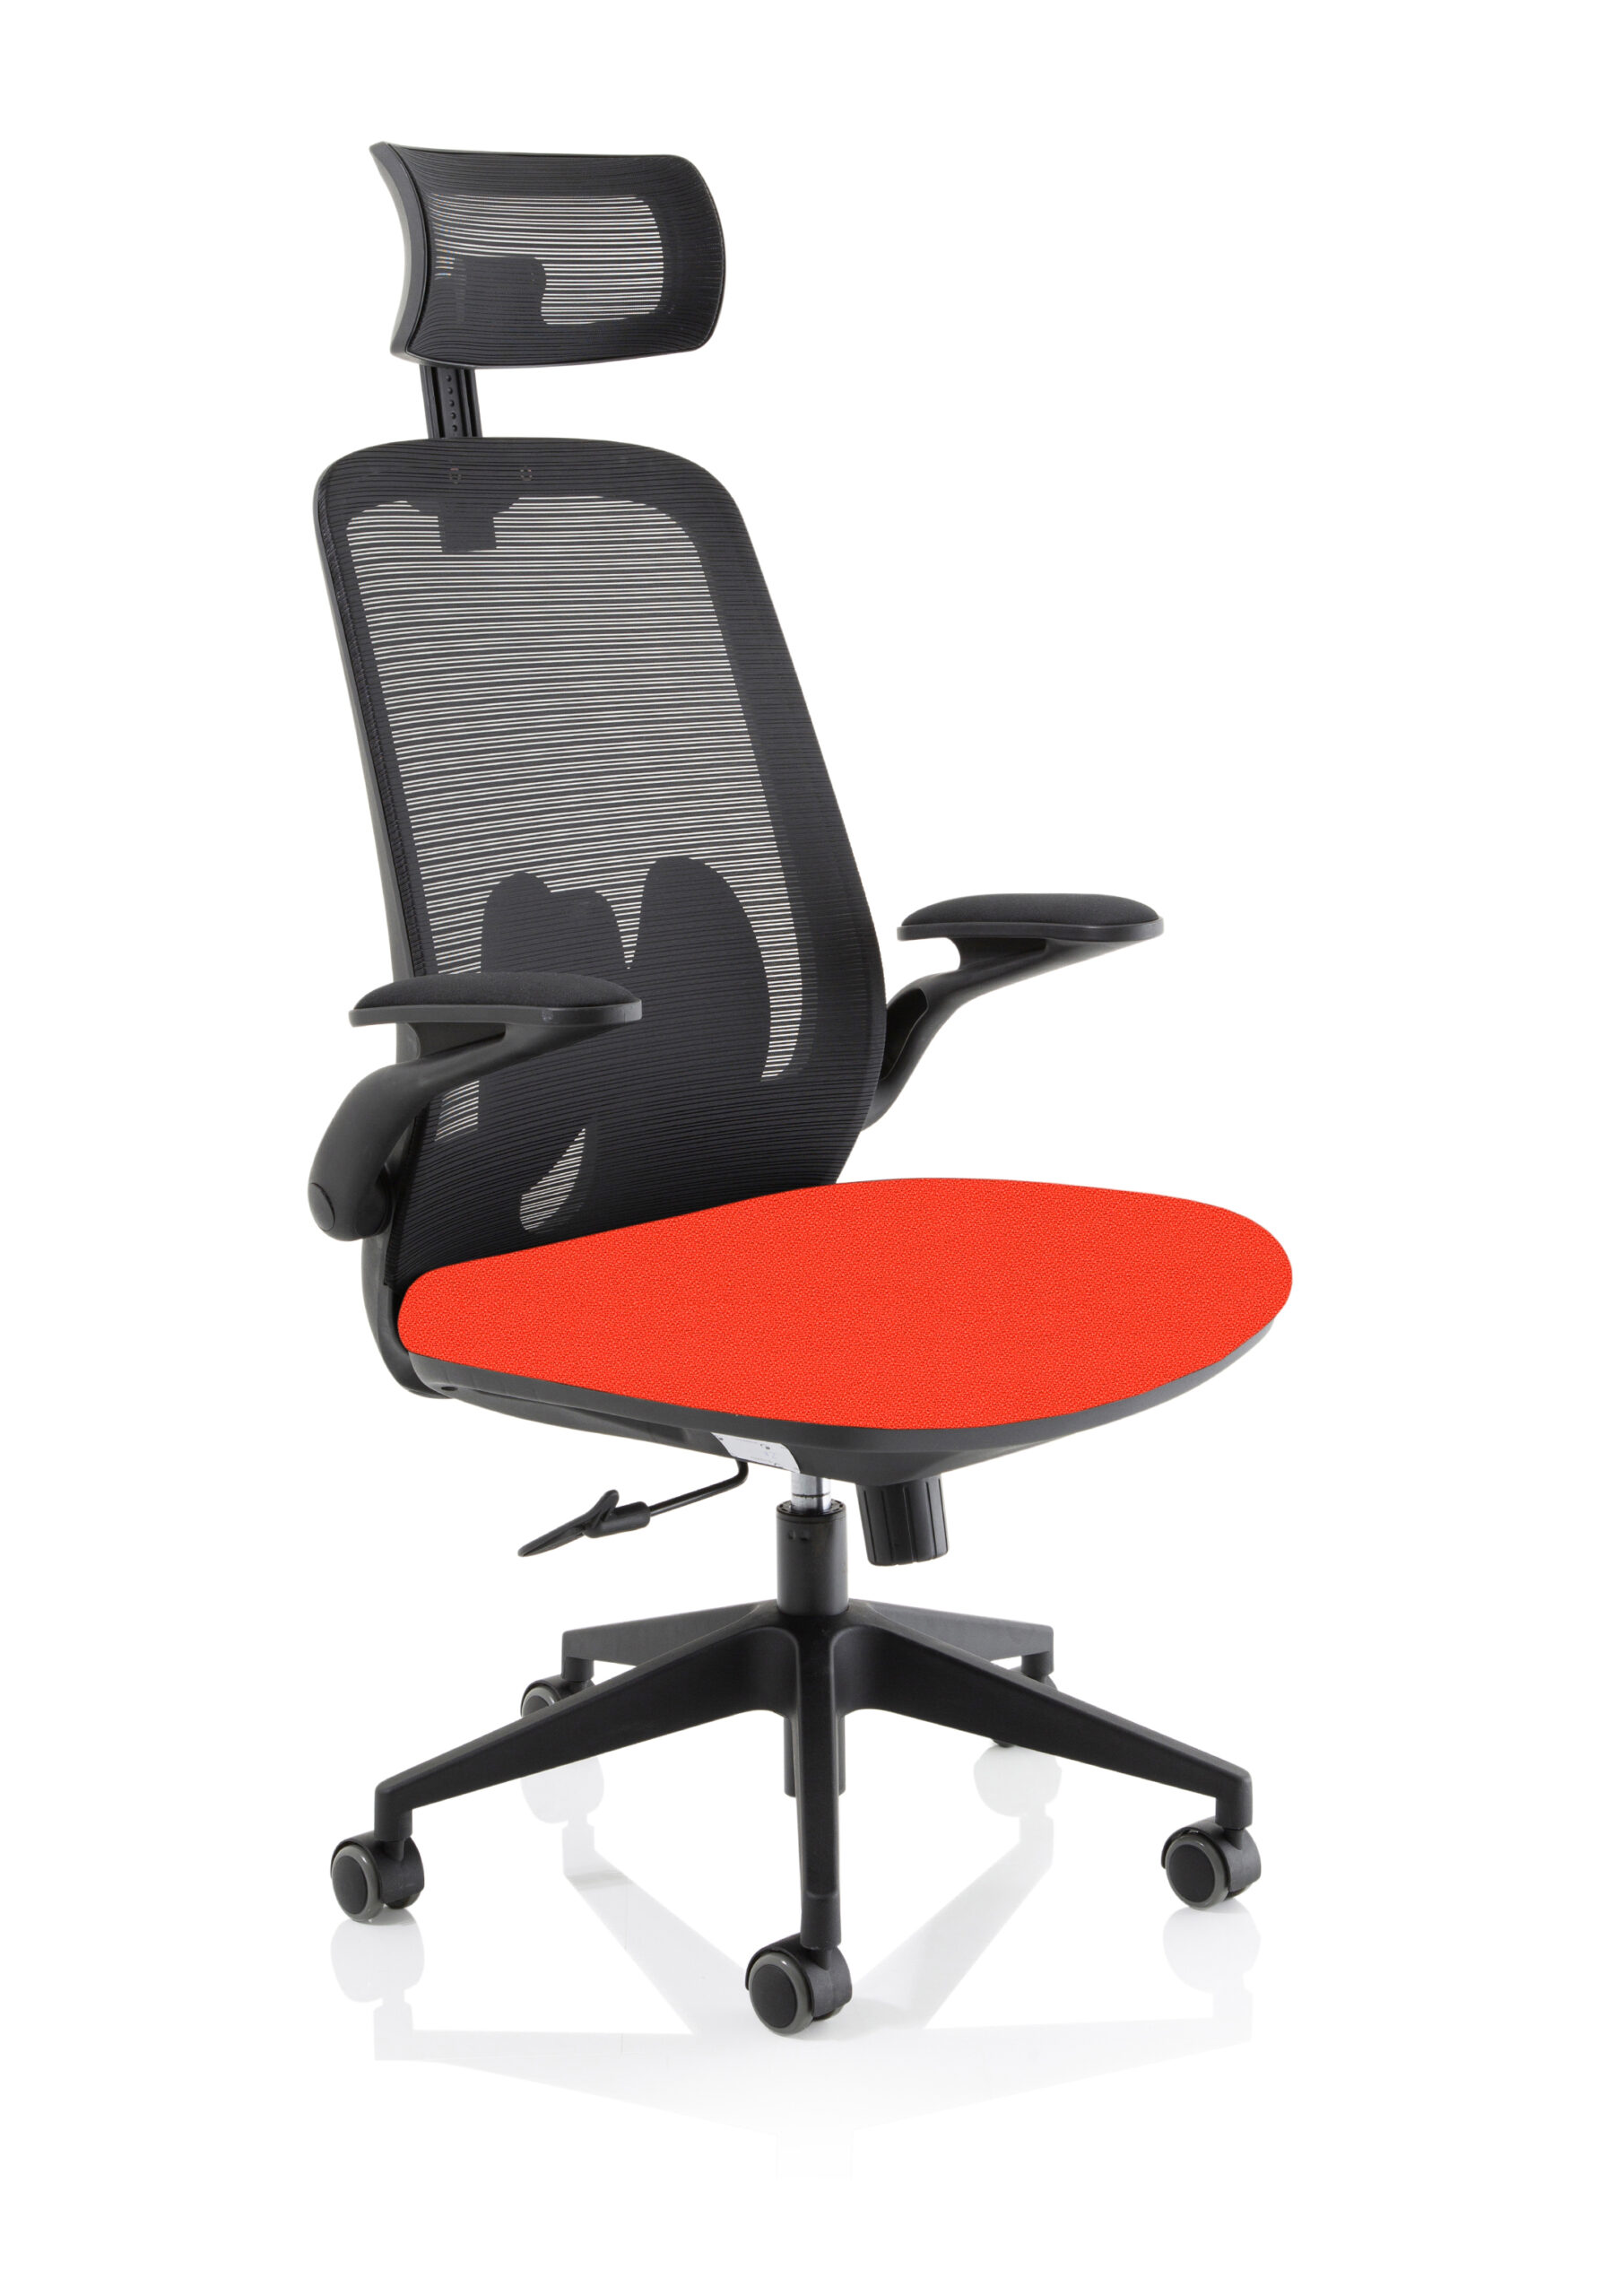 Lasino Executive Bespoke Fabric Seat Tabasco Orange Mesh Chair With Folding Arms